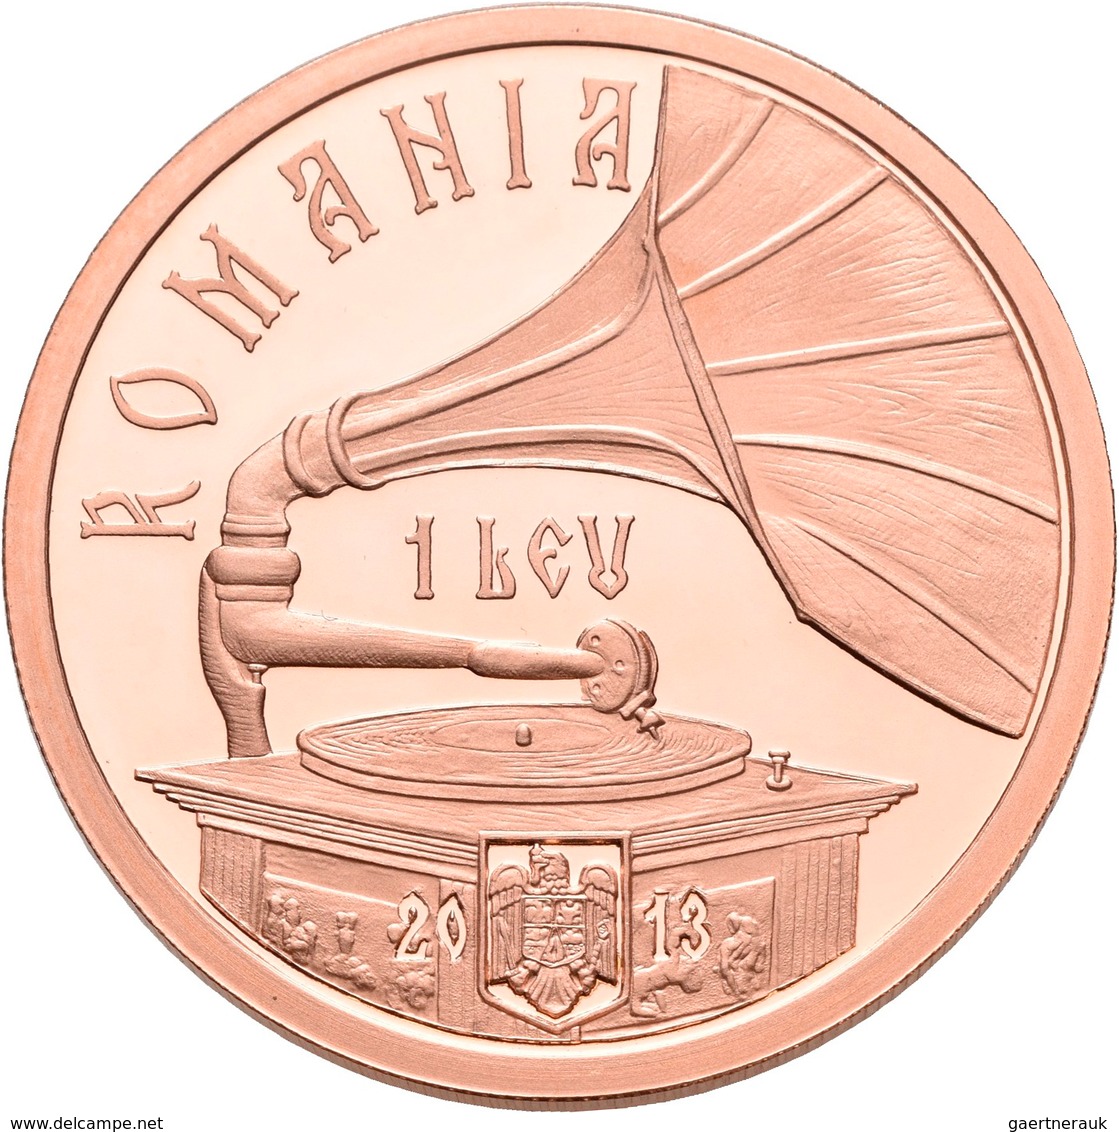 Rumänien: 1 Leu 2013, 100. Geburtstag Maria Tanase. KM# N.b. Verkupferte Tombac. Auflage Nur 250 Stü - Romania